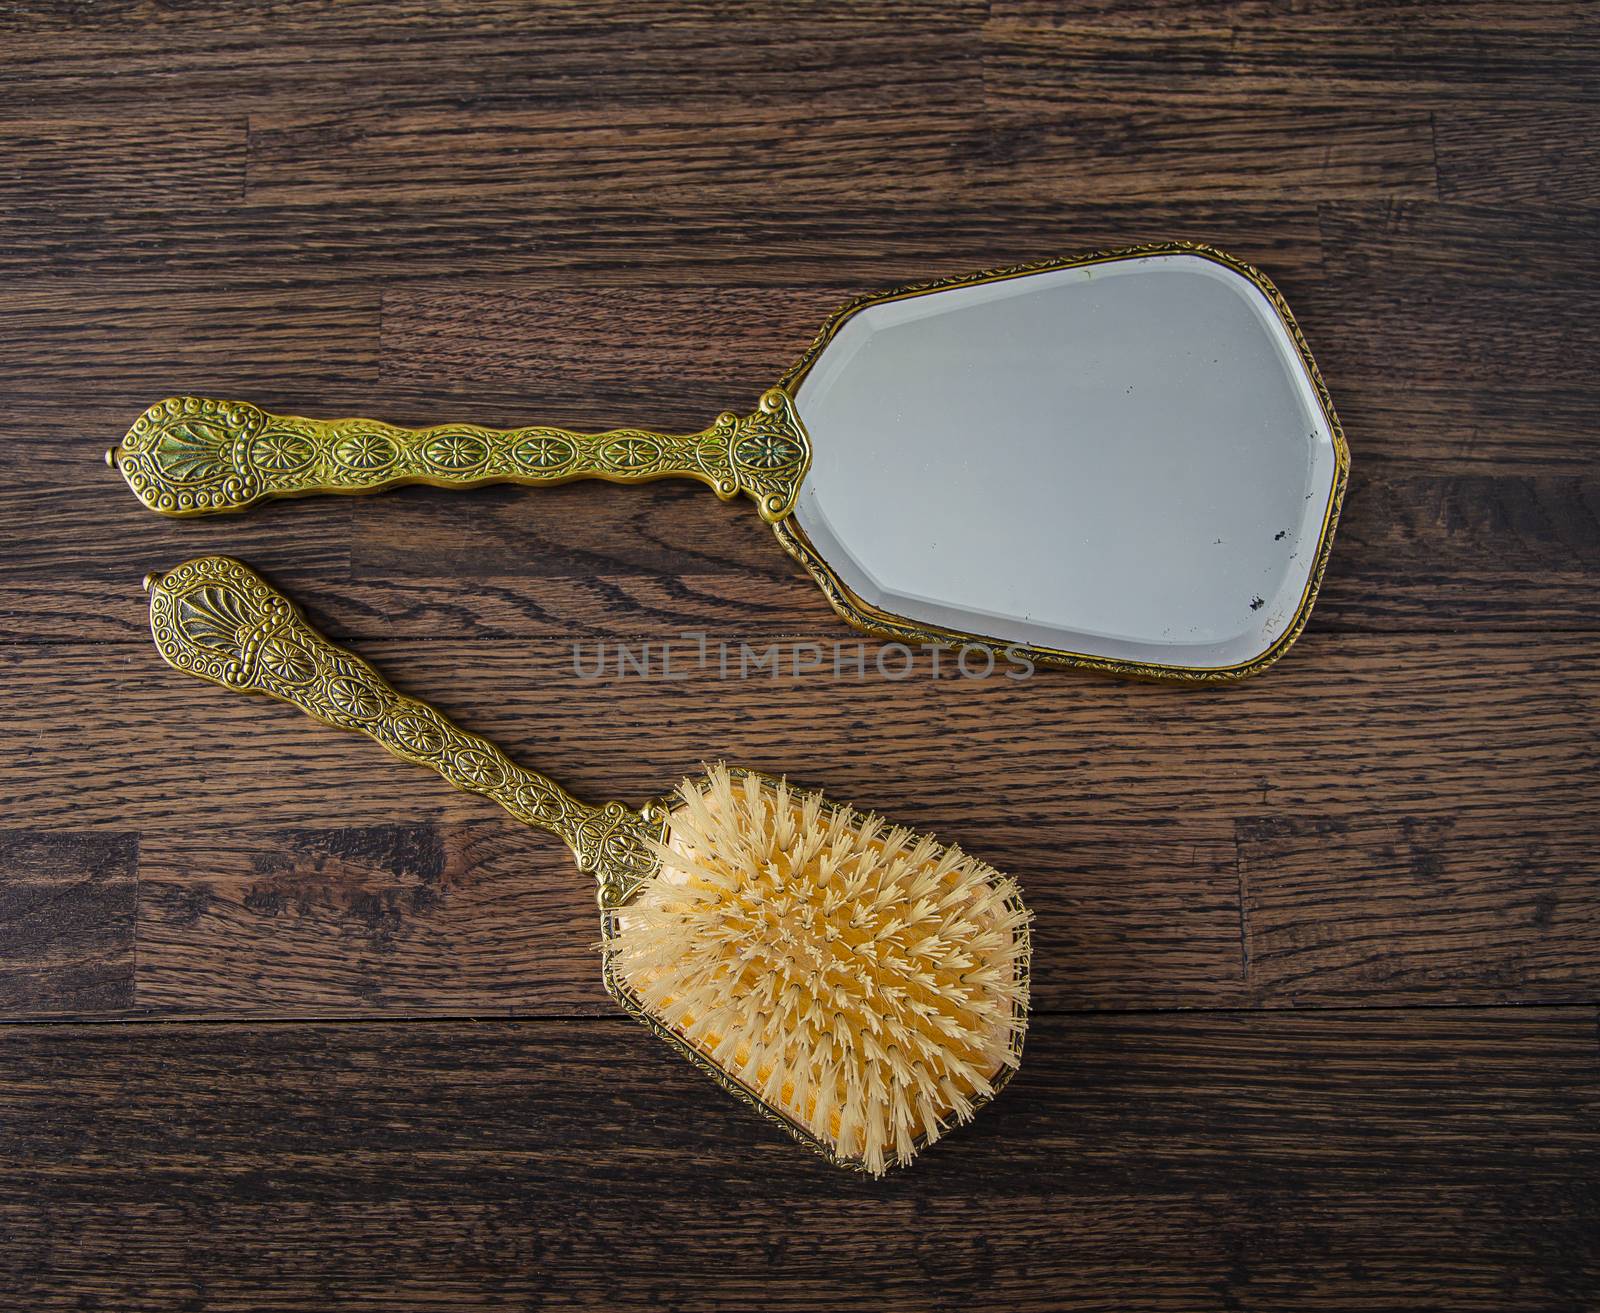 Vintage hand mirror and hair brush by mypstudio